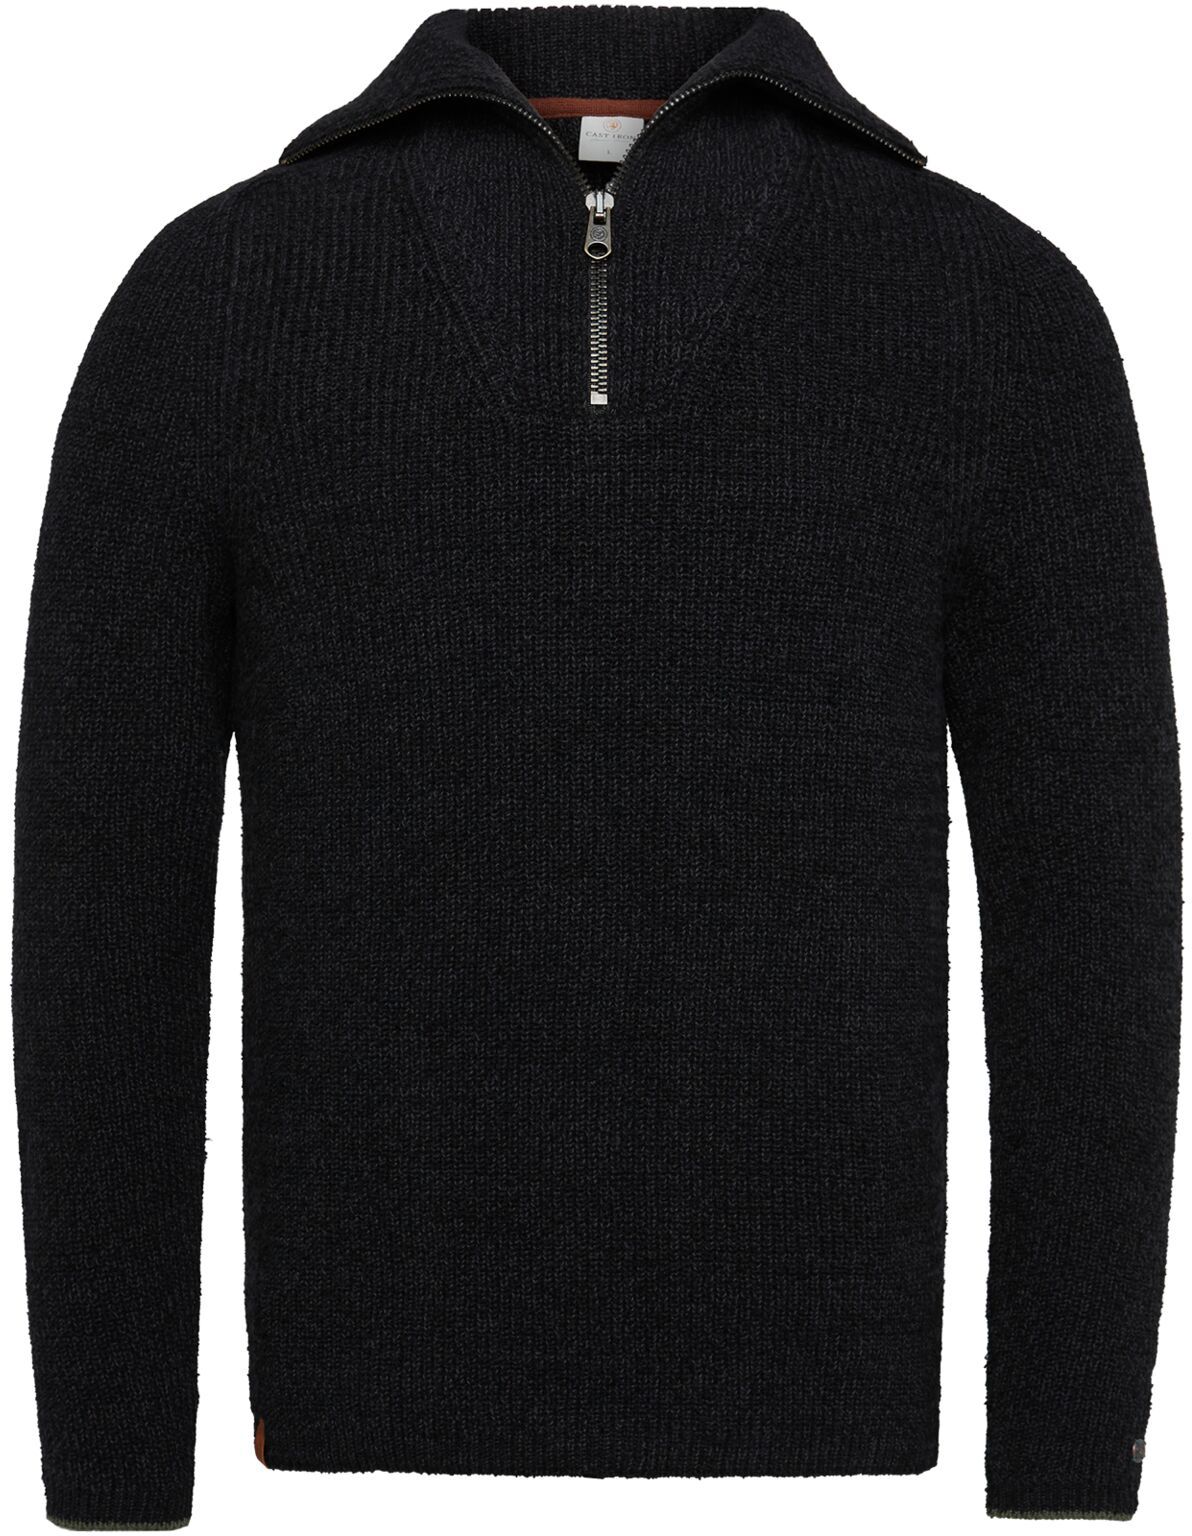 Cast Iron Half Zip Sweater Black size L